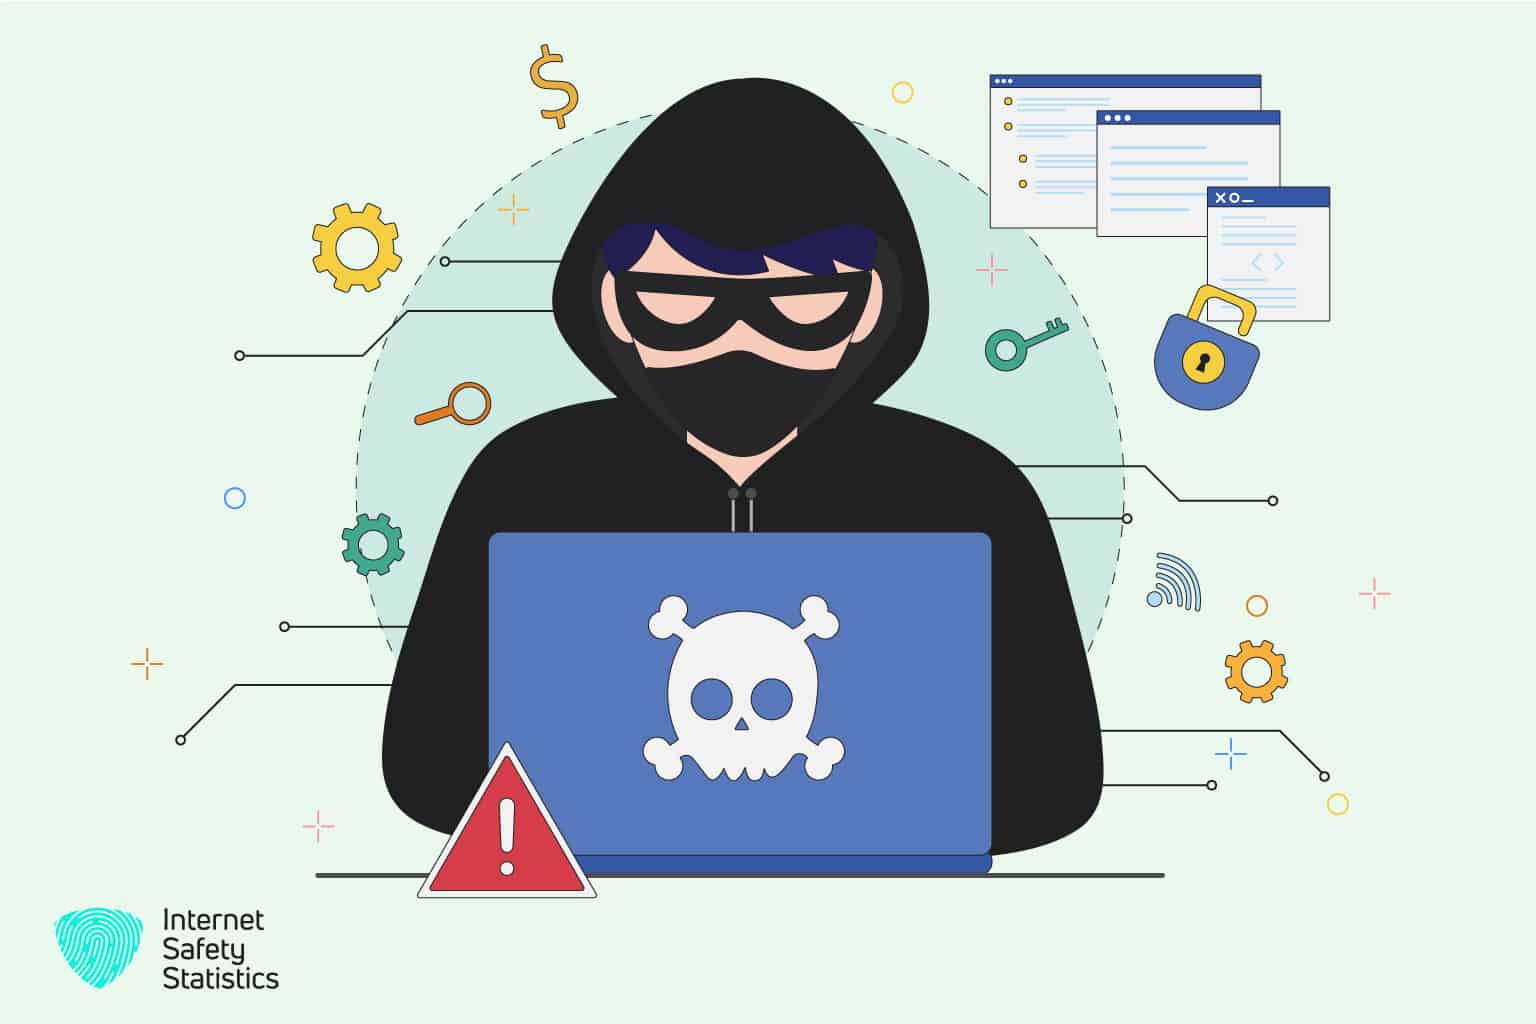 Cybercrime-as-a-Service (CaaS): The Big Threat